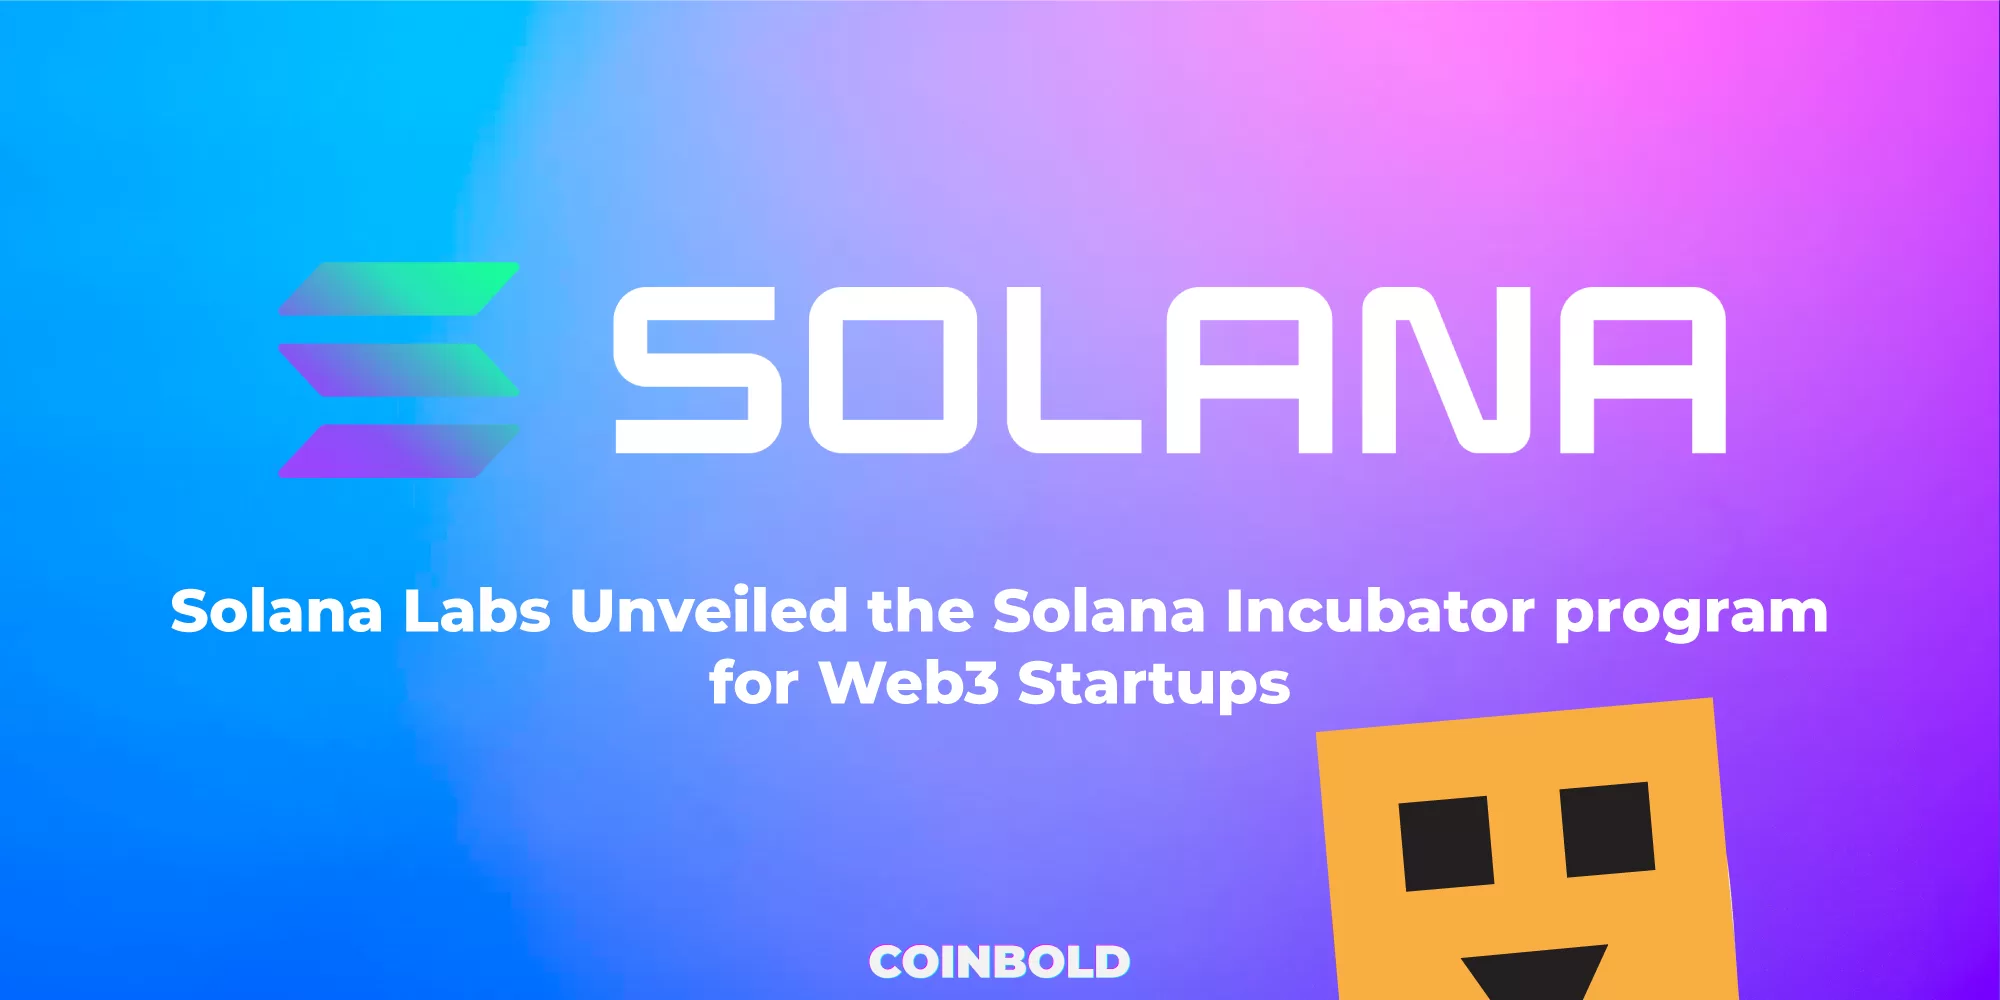 Solana Labs Unveiled the Solana Incubator program for Web3 Startups